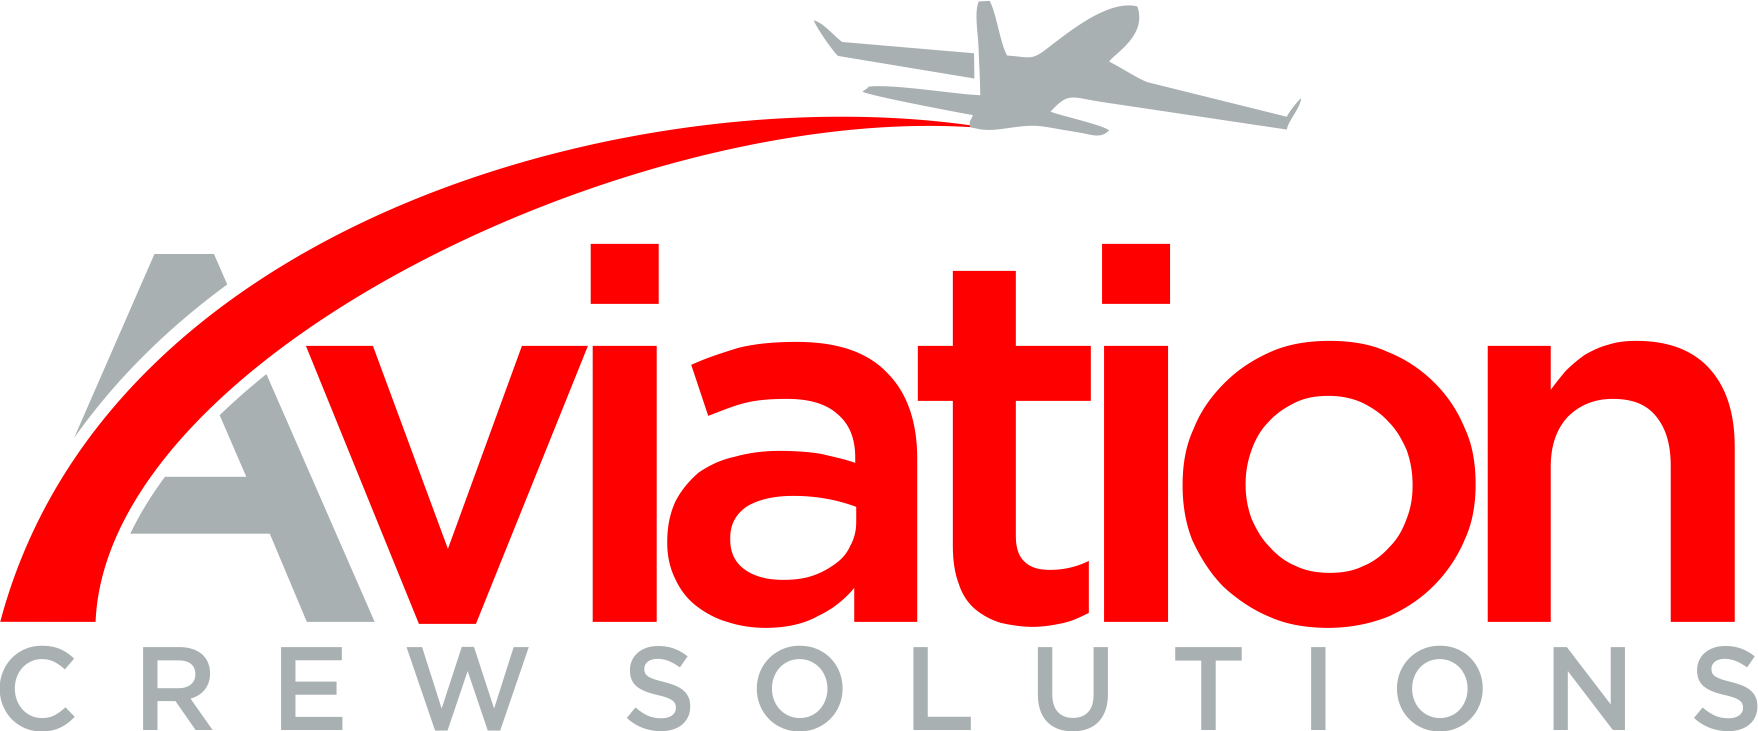 Aviation Crew Solutions